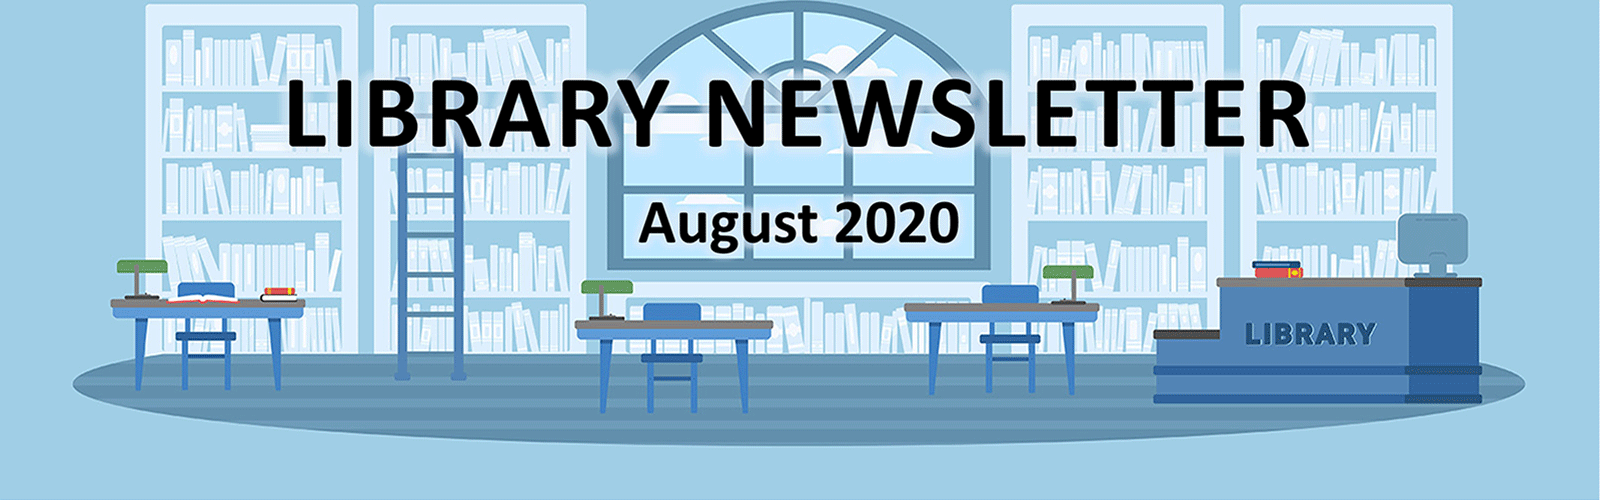 August 2020 Library Newsletter banner